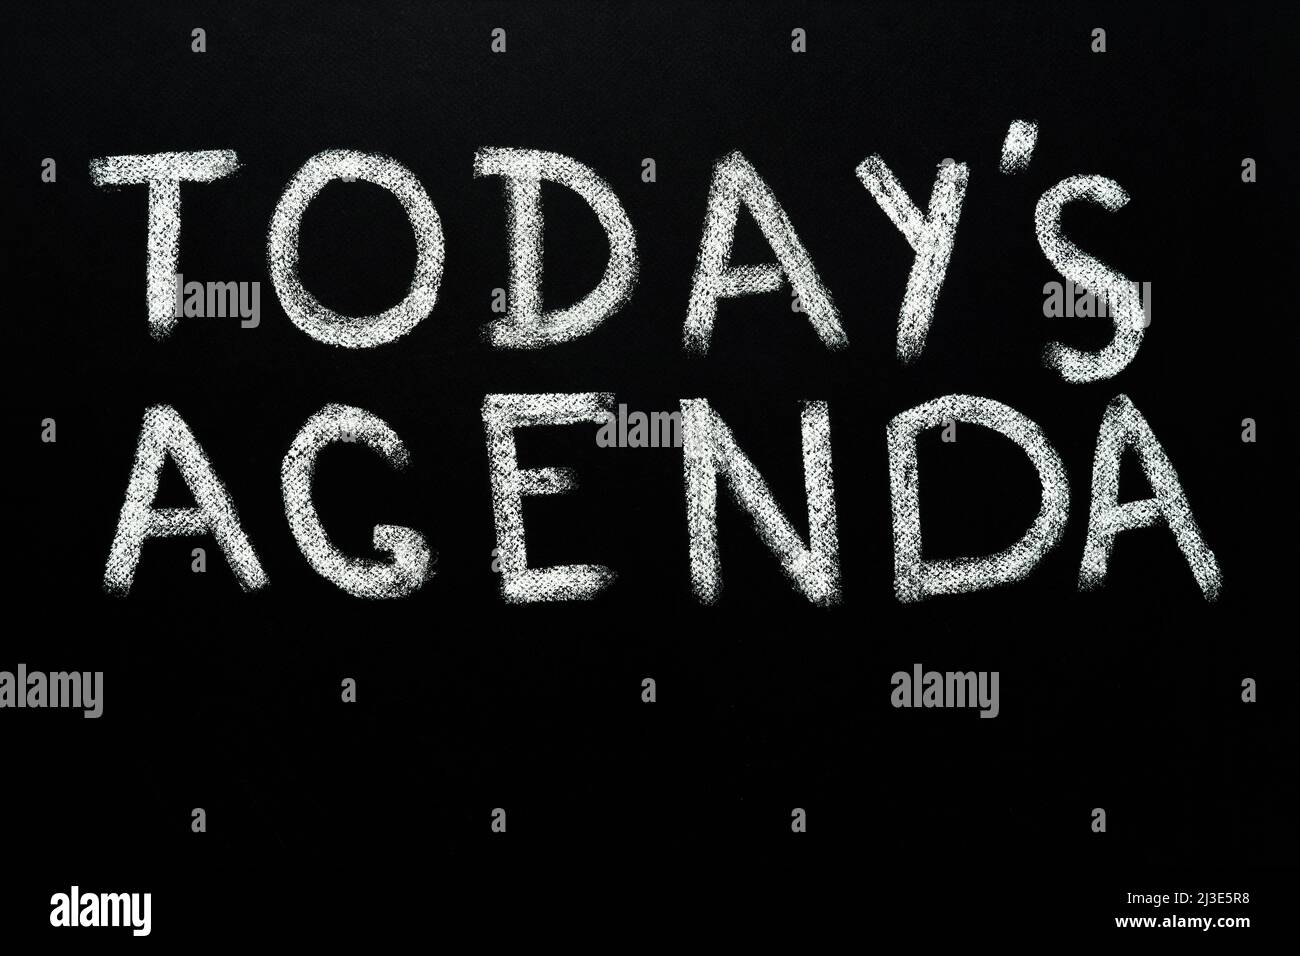 Handwritten words today's agenda background chalkboard texture background black board chalk text today's agenda design black chalkboard writing Stock Photo